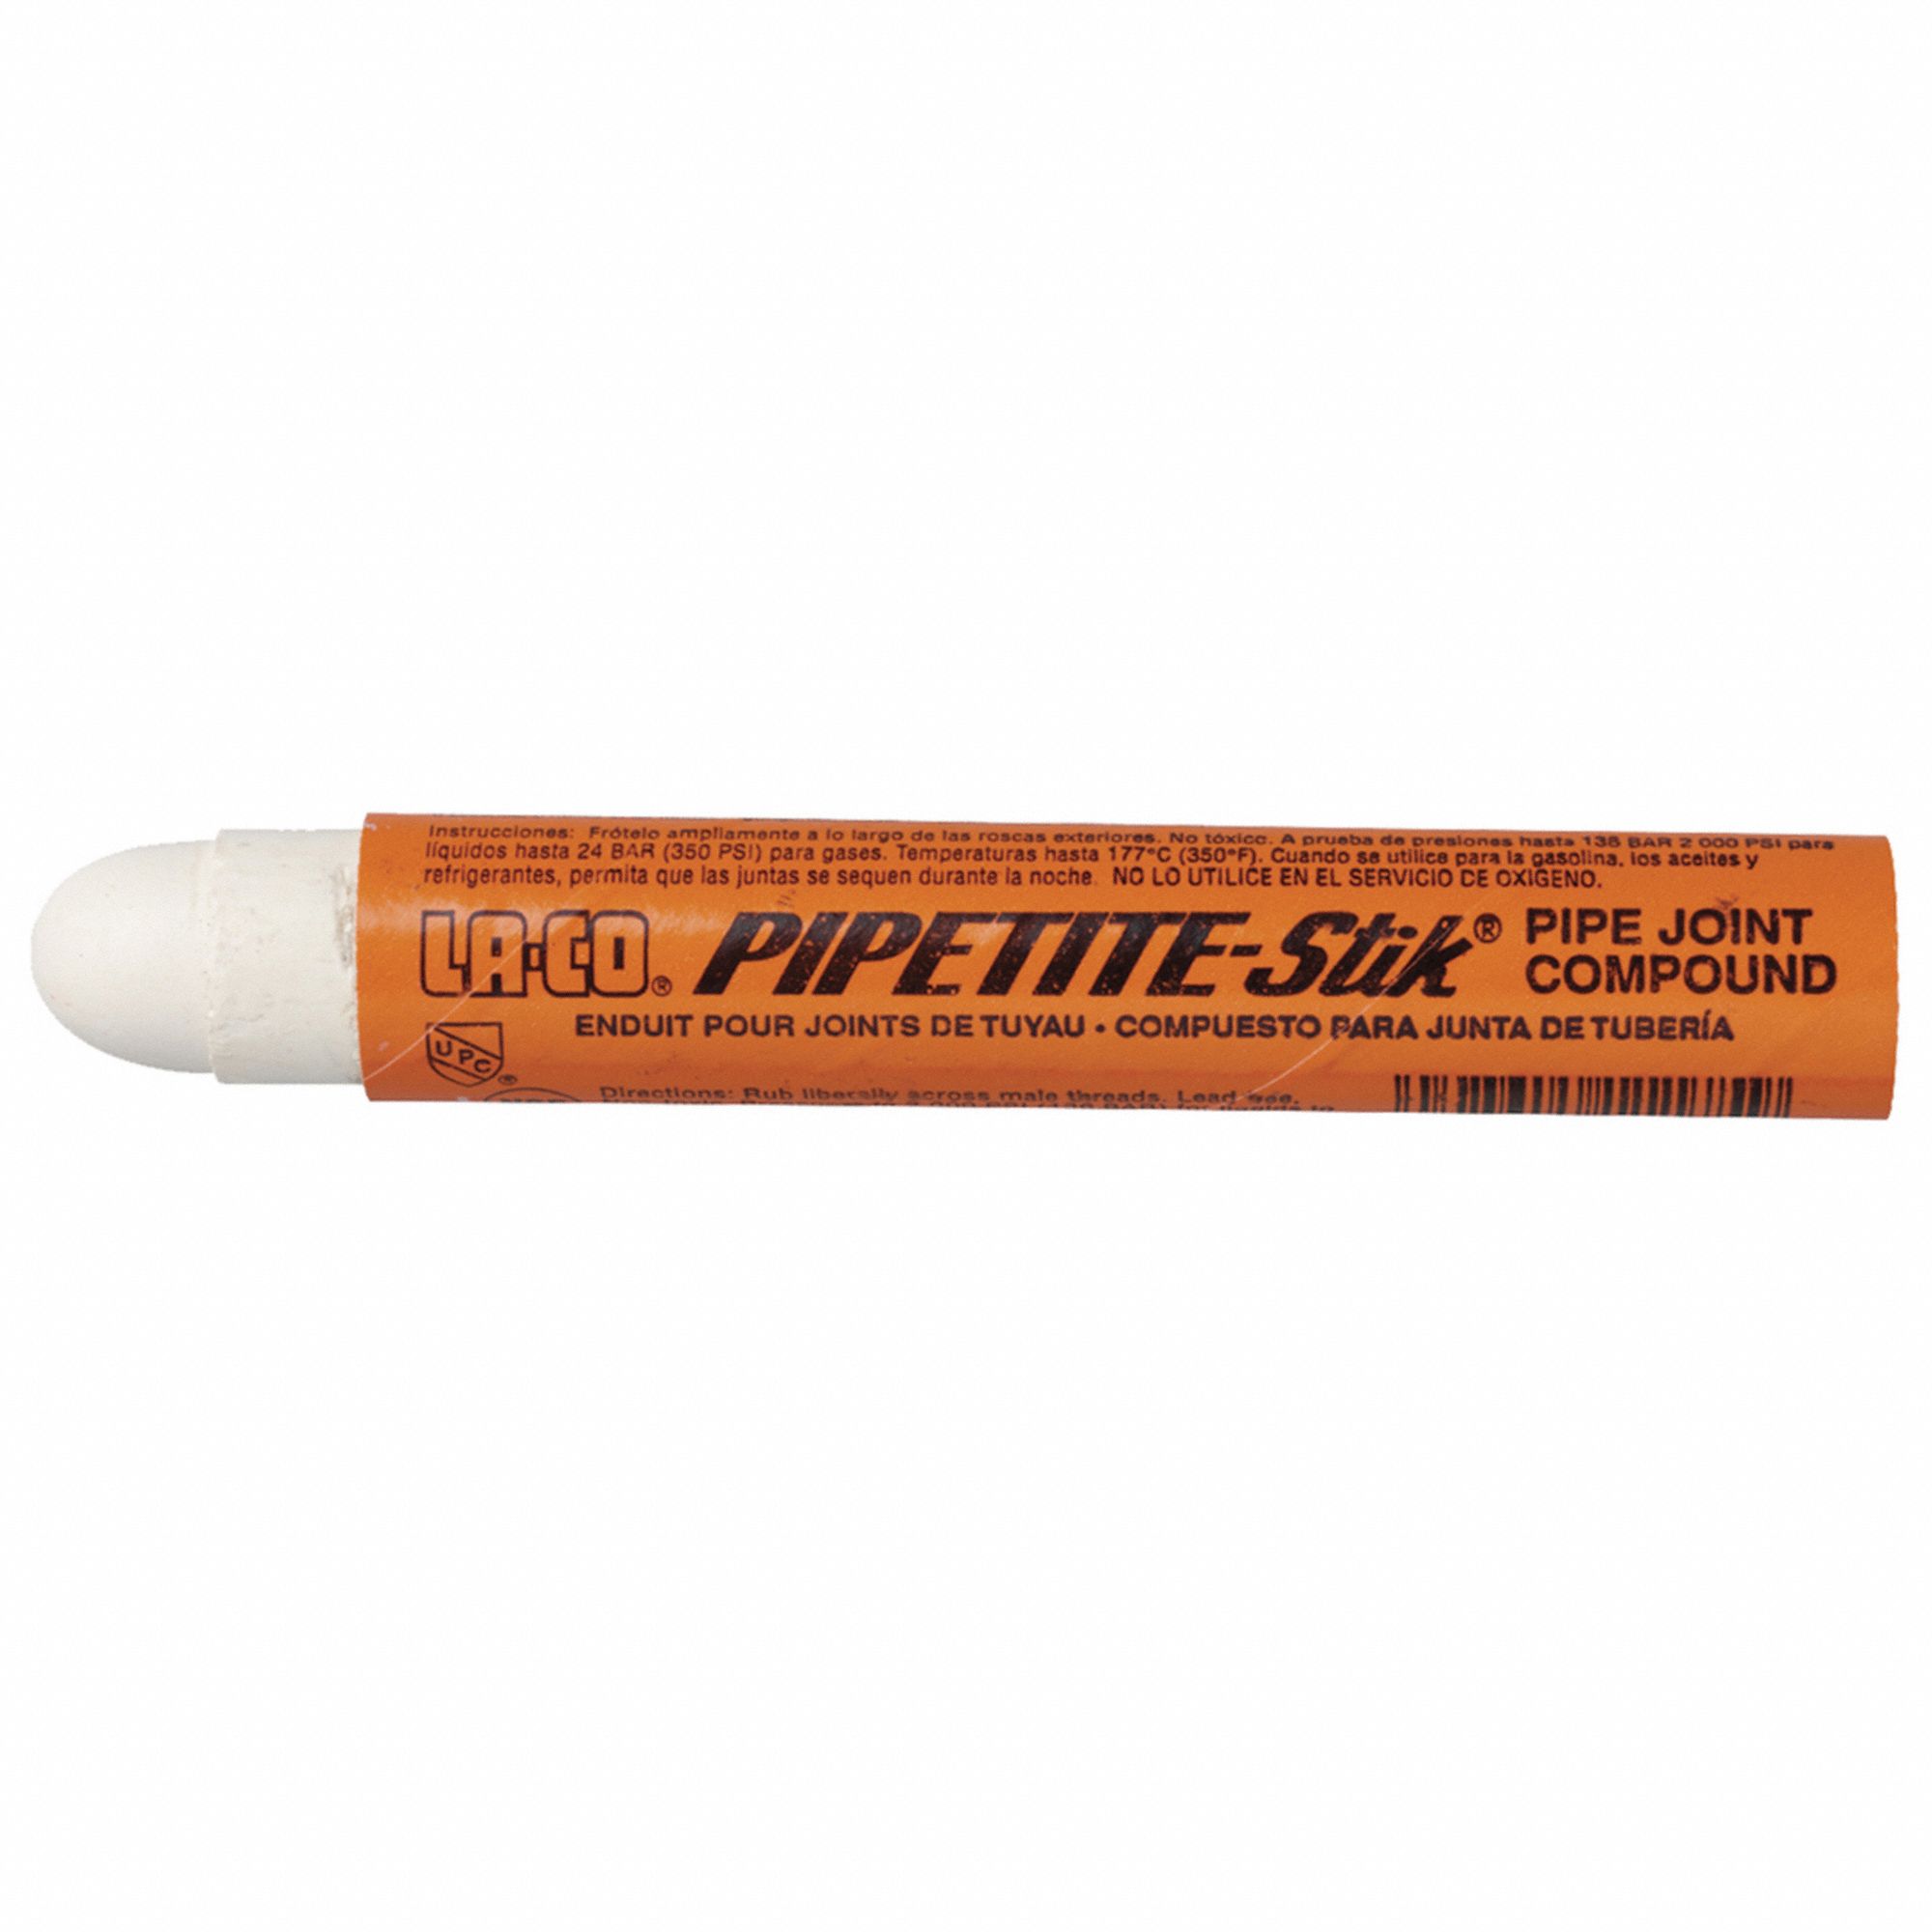 Pipe Thread Sealant: Pipetite-Stik, 1.3 oz, Stick, White, High Lubricity/No-Drip